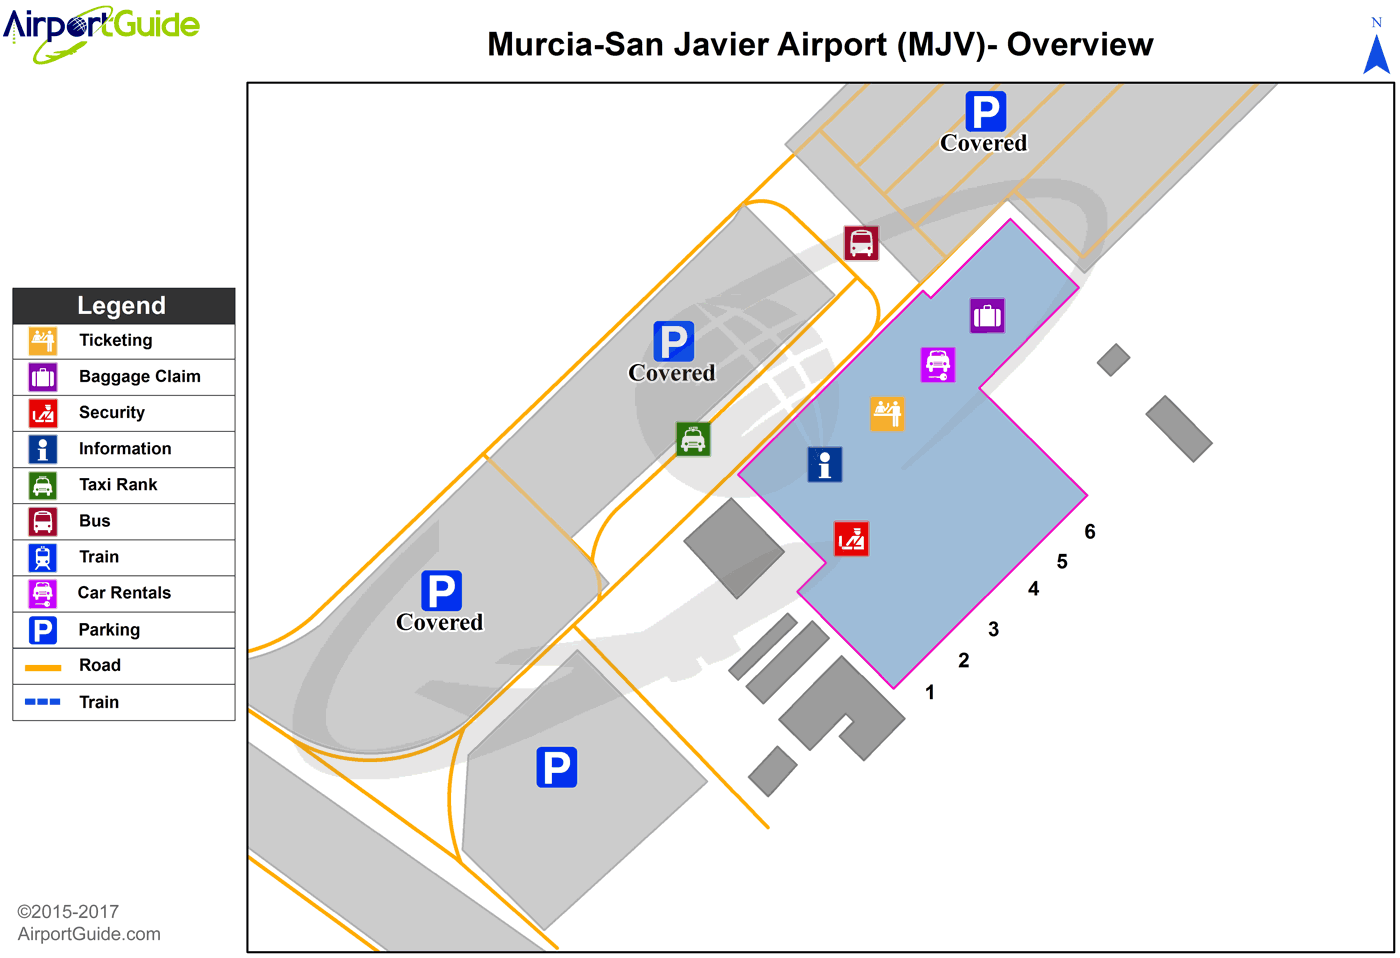 San Javier - San Javier (MJV) Airport Terminal Map - Overview